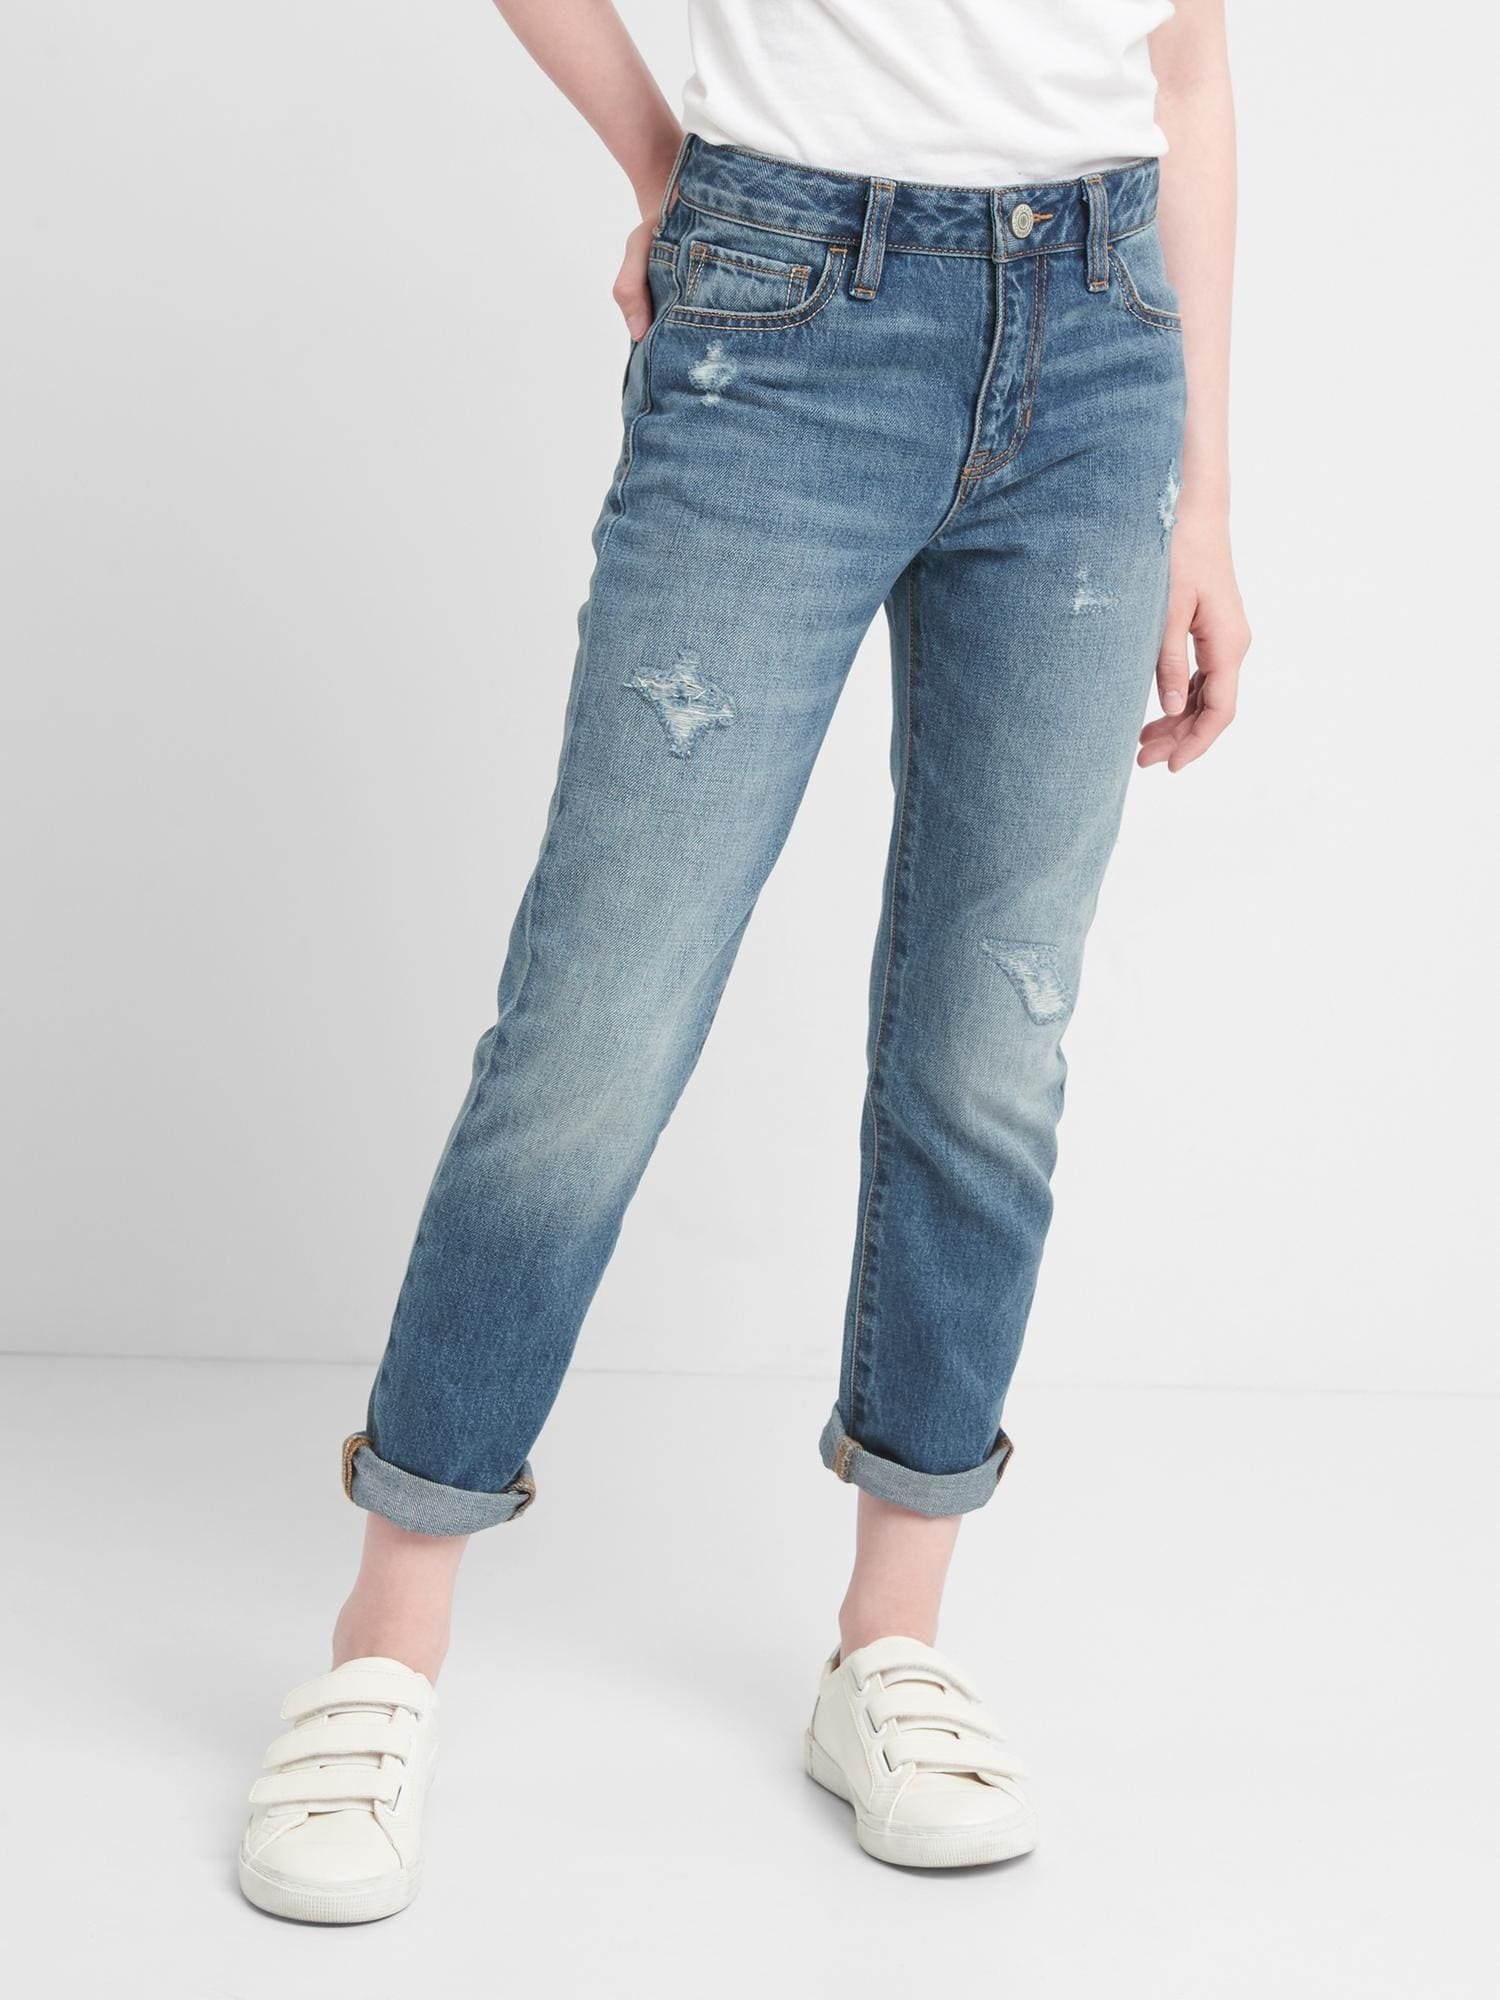 Eskitmeli girlfriend jean pantolon product image